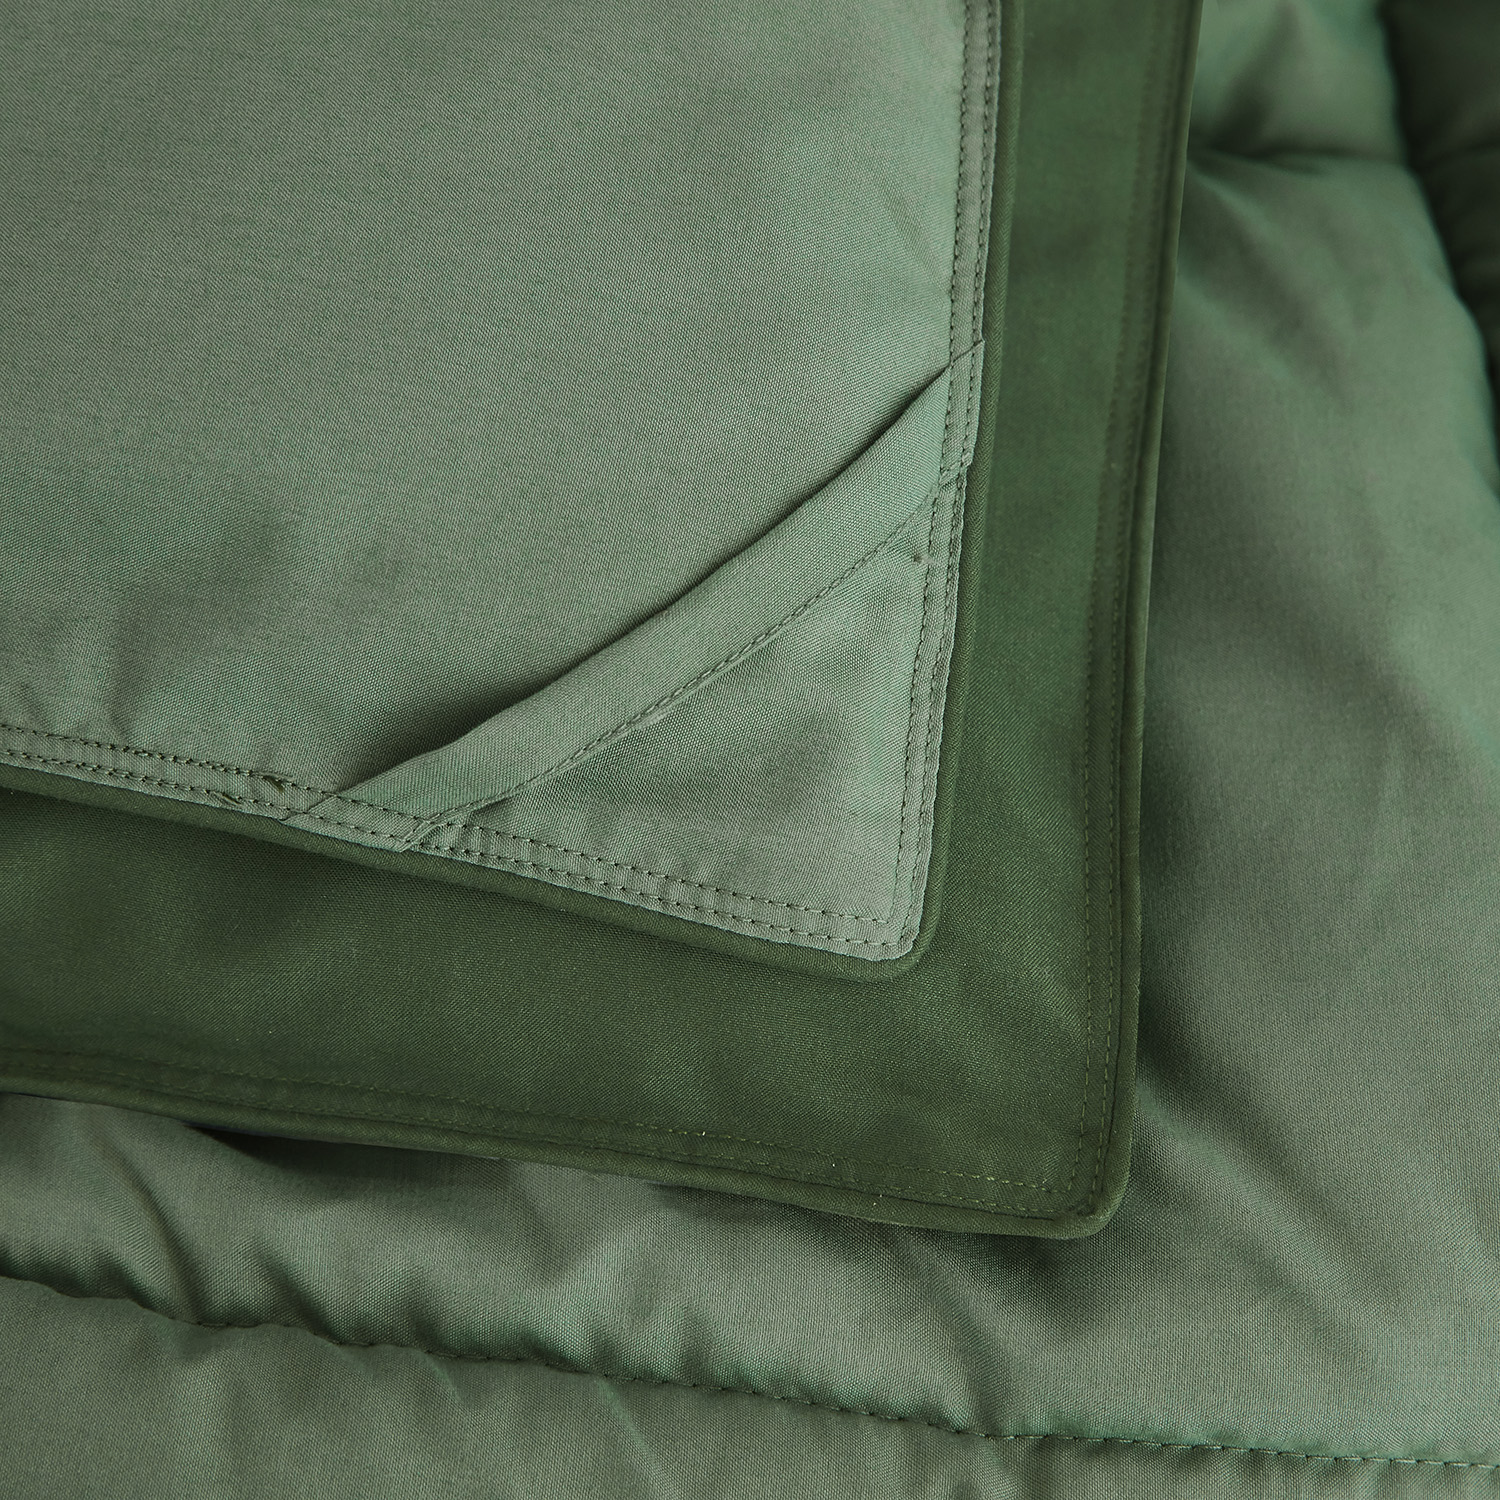 HIG 3pc All Season Lightweight Reversible Green Down Alternative Comforters